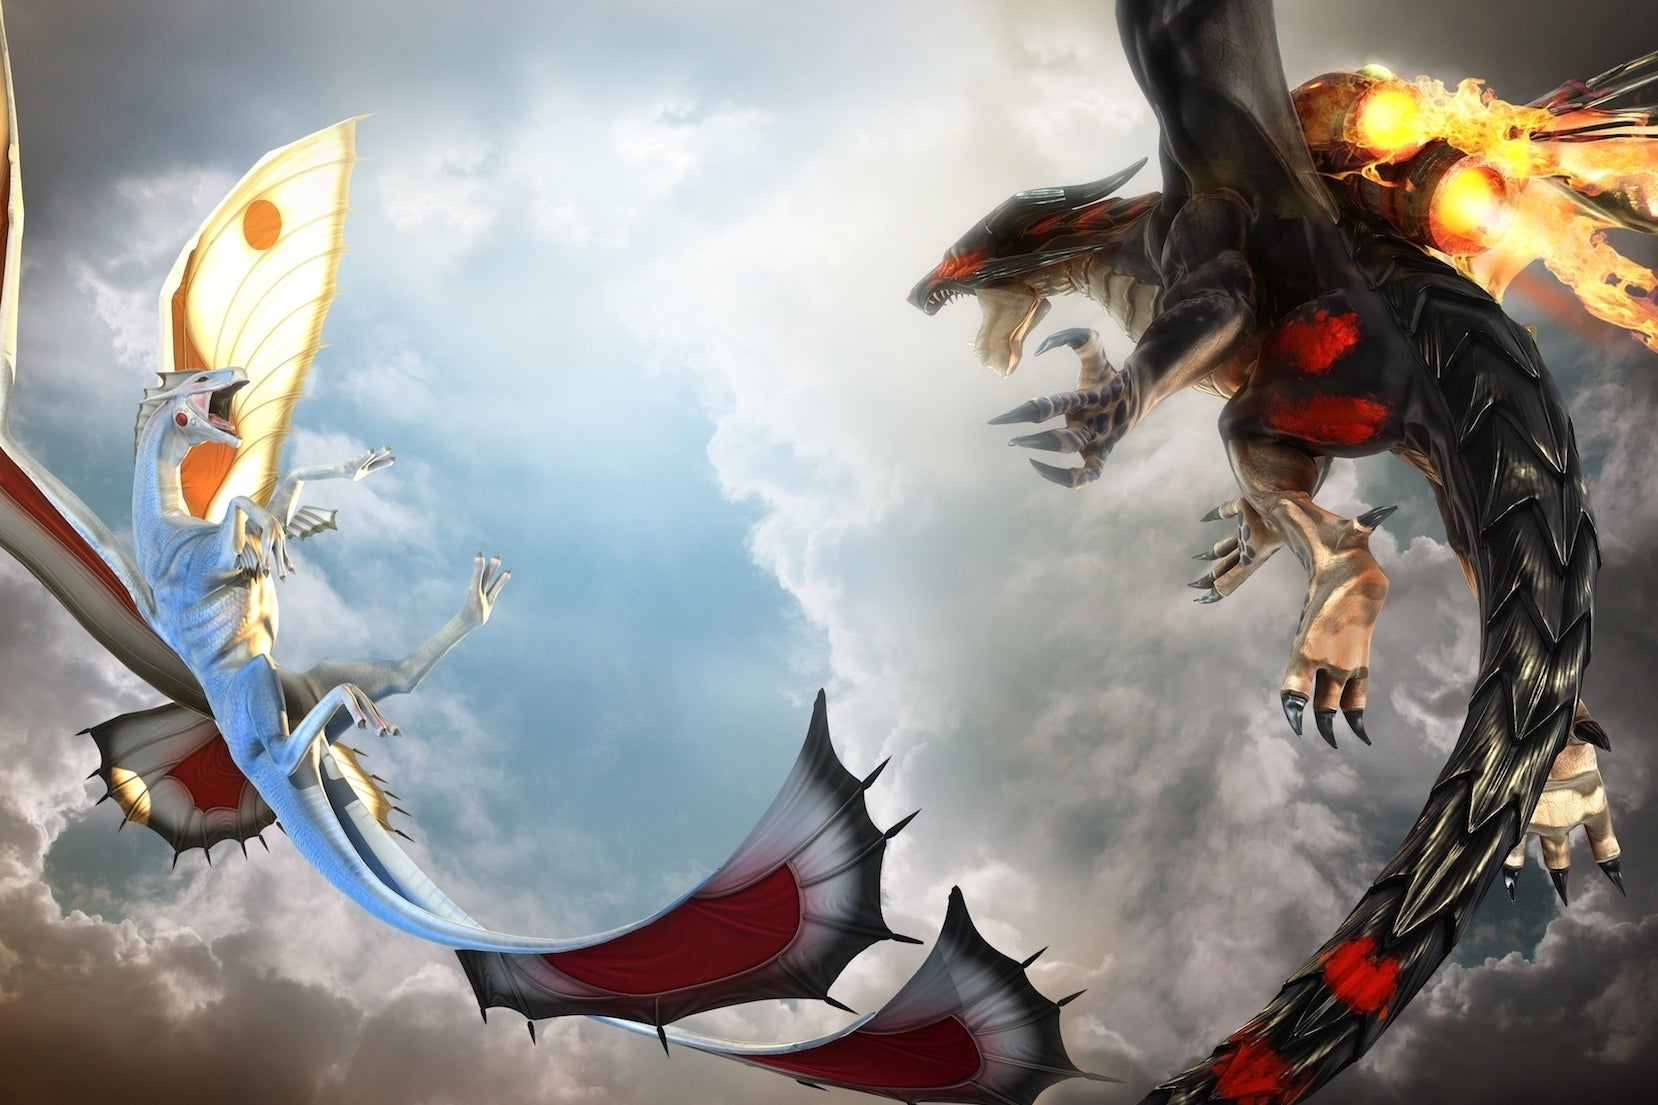 Obrazki dla Ponad 25 minut rozgrywki z Divinity: Dragon Commander od Larian Studios